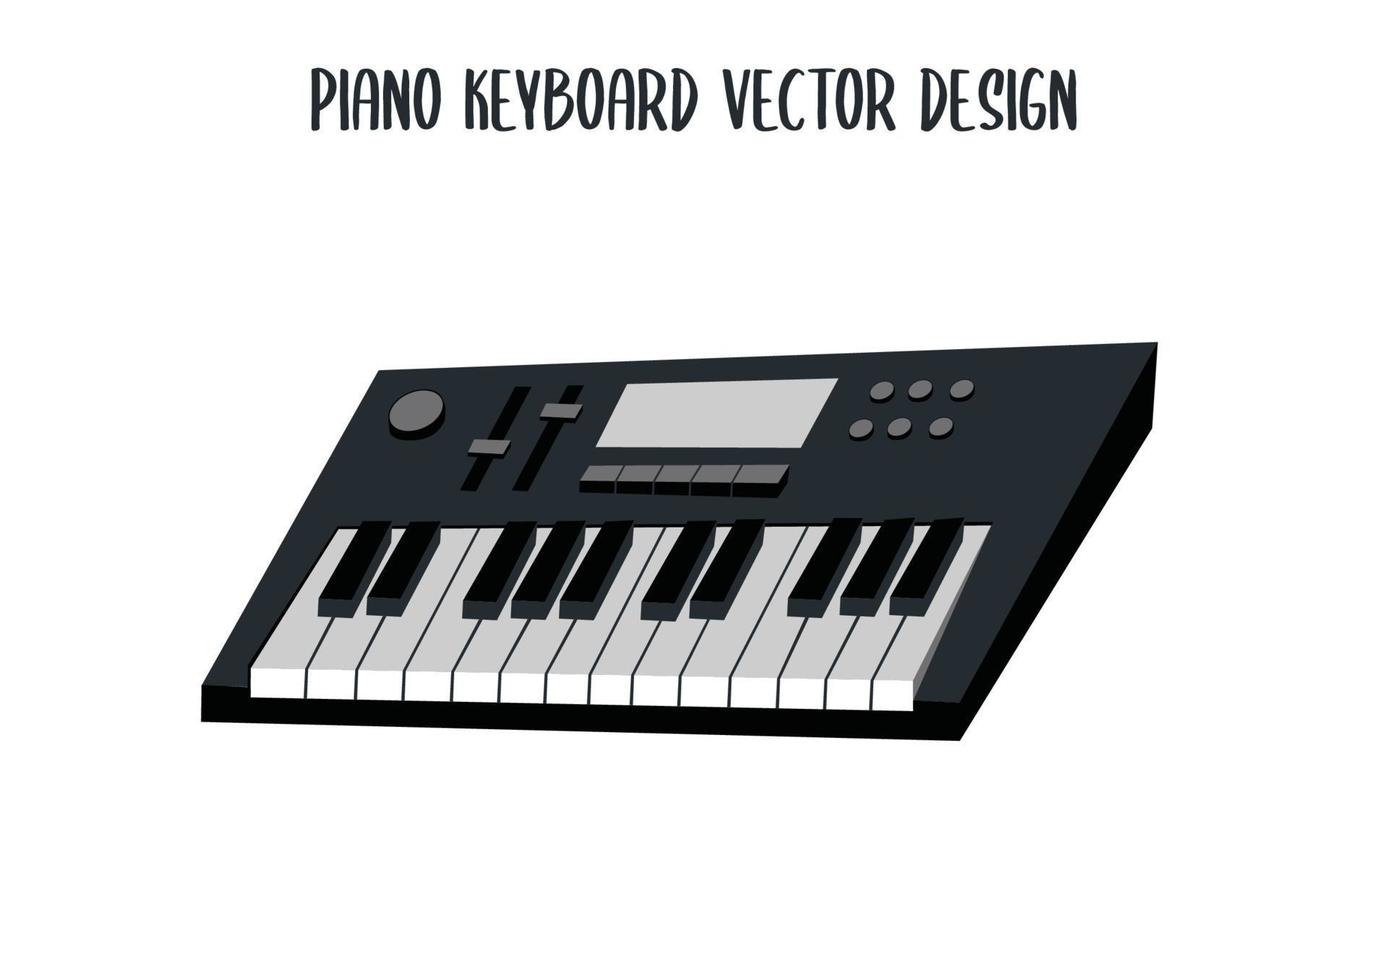 design de vetor de instrumento musical de teclado de piano eletrônico. teclado sintetizador clipart estilo plano ilustração vetorial isolado no fundo branco. vetor de teclado de piano